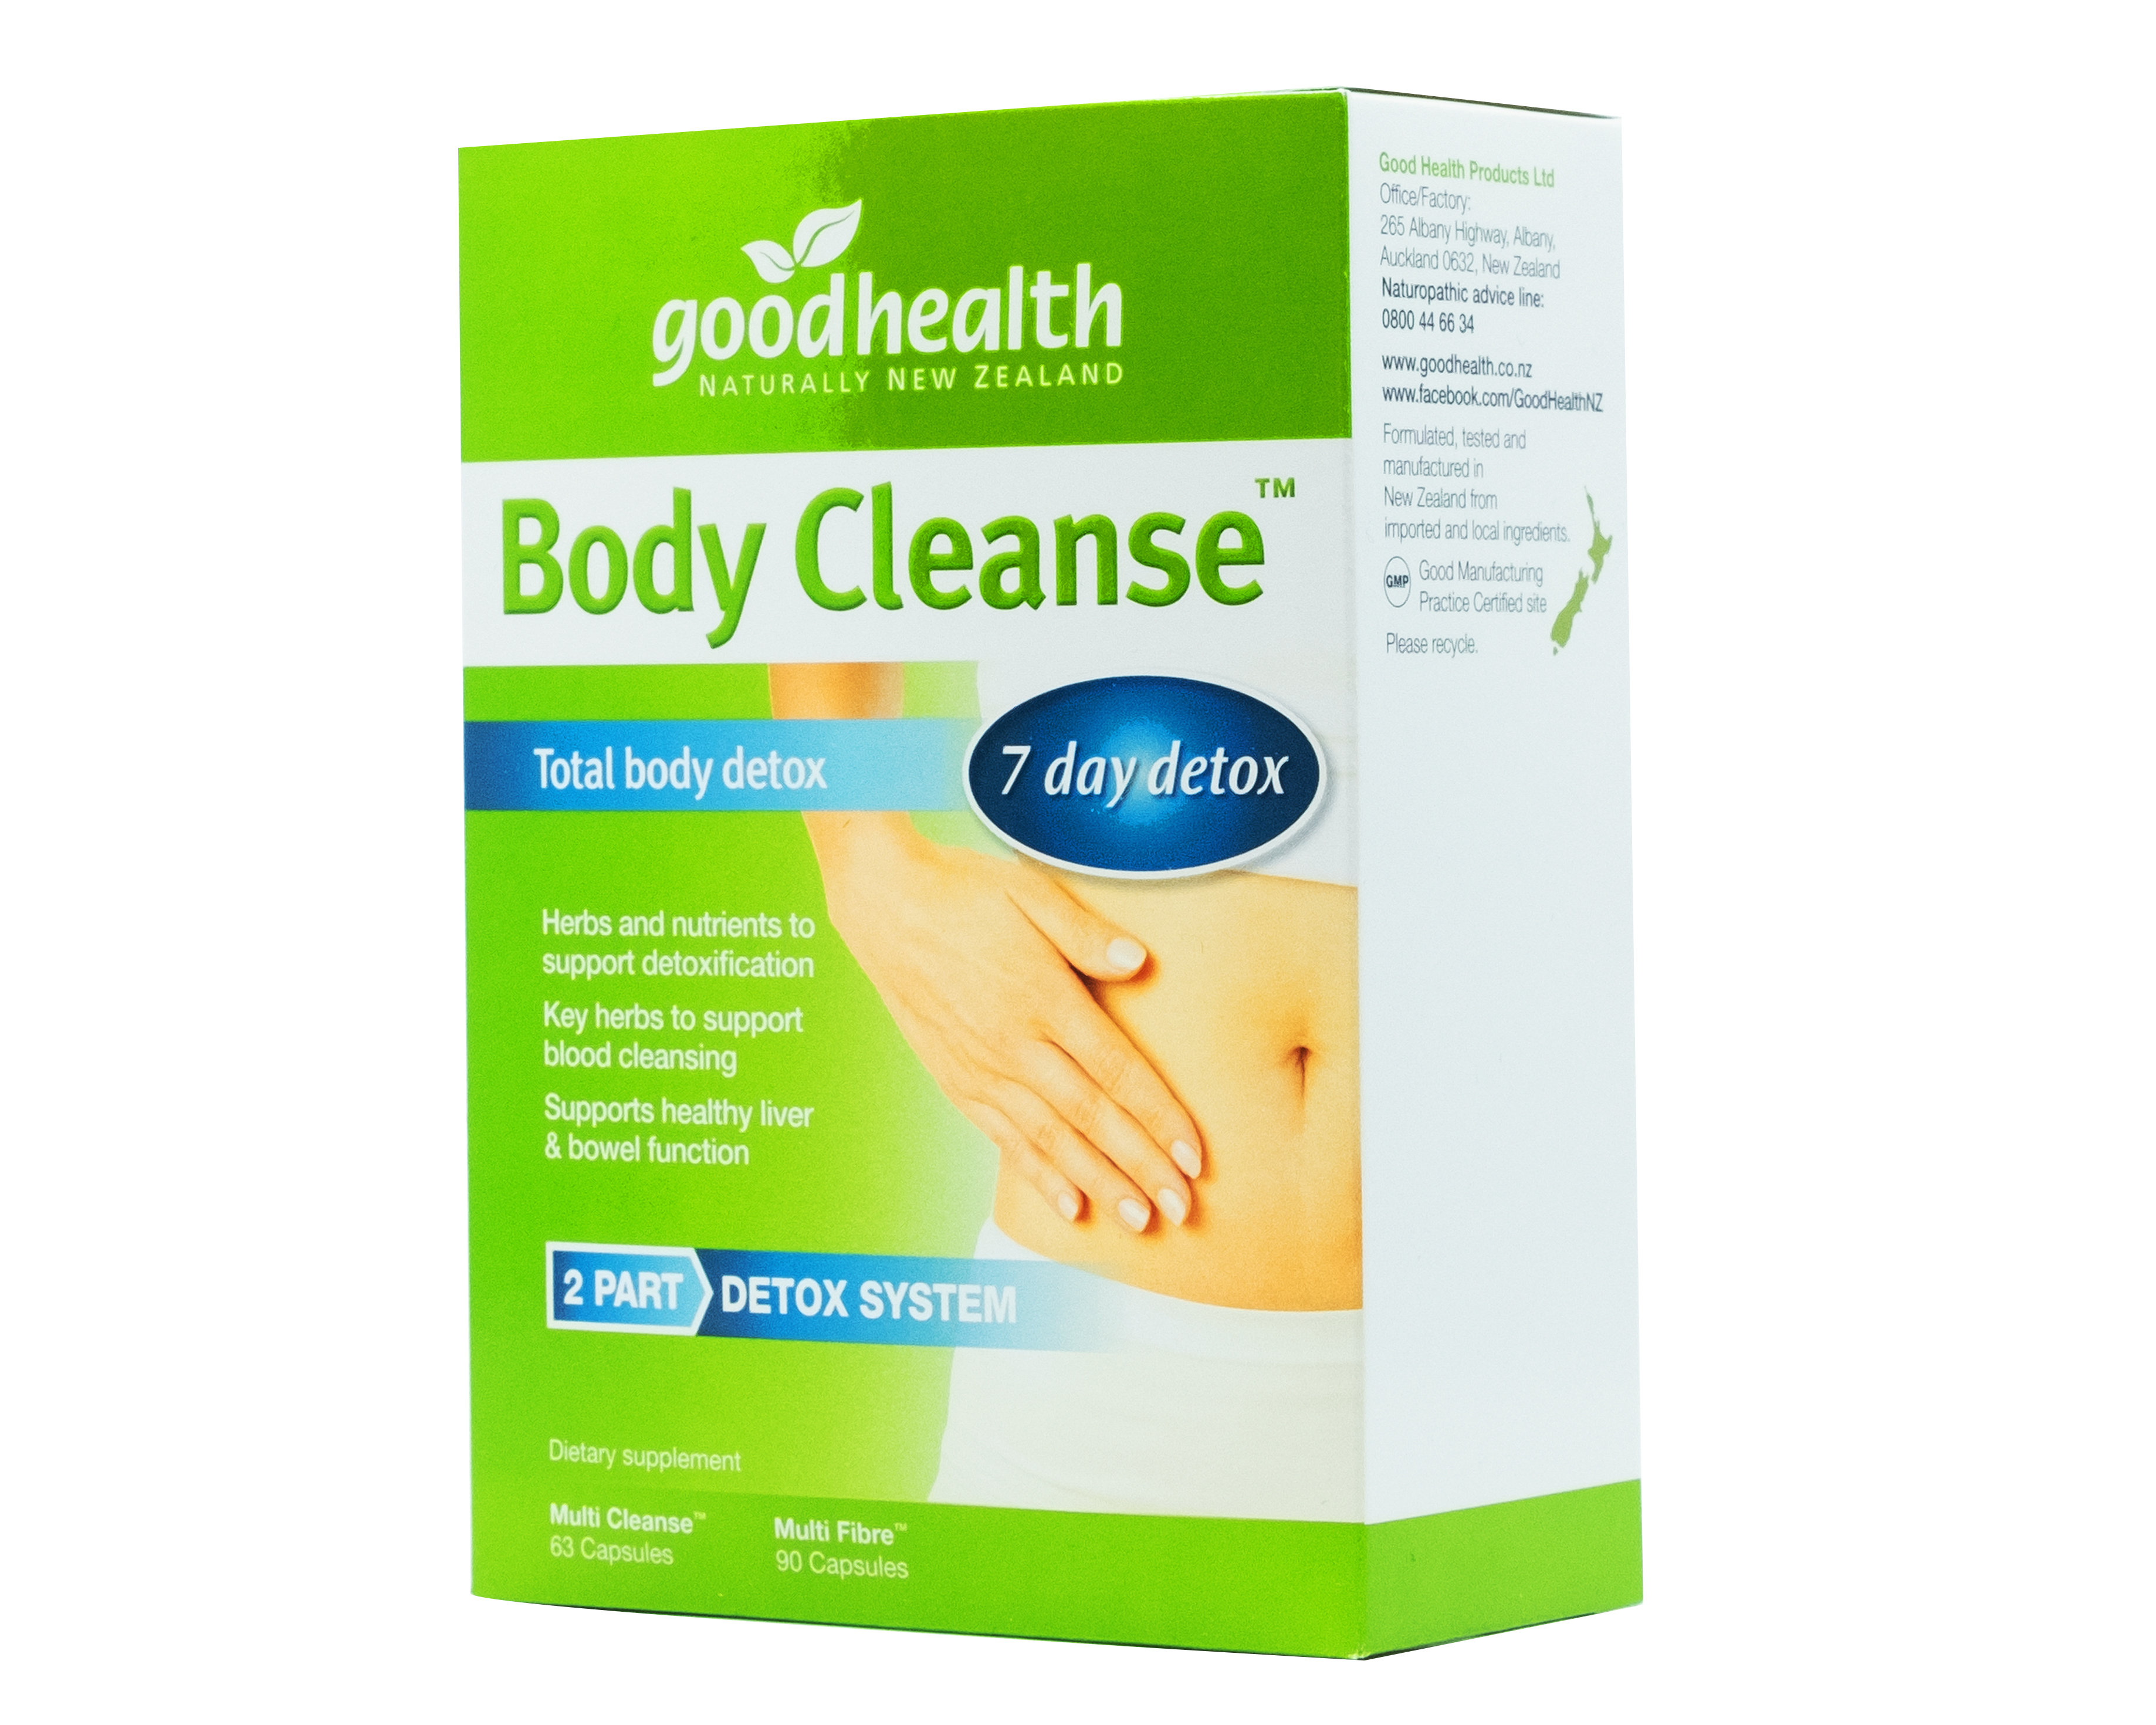 Good Health Body Cleanse Detox Multi Cleanse 63 caps / Multi Fibre 90 caps - 365 Health Limited